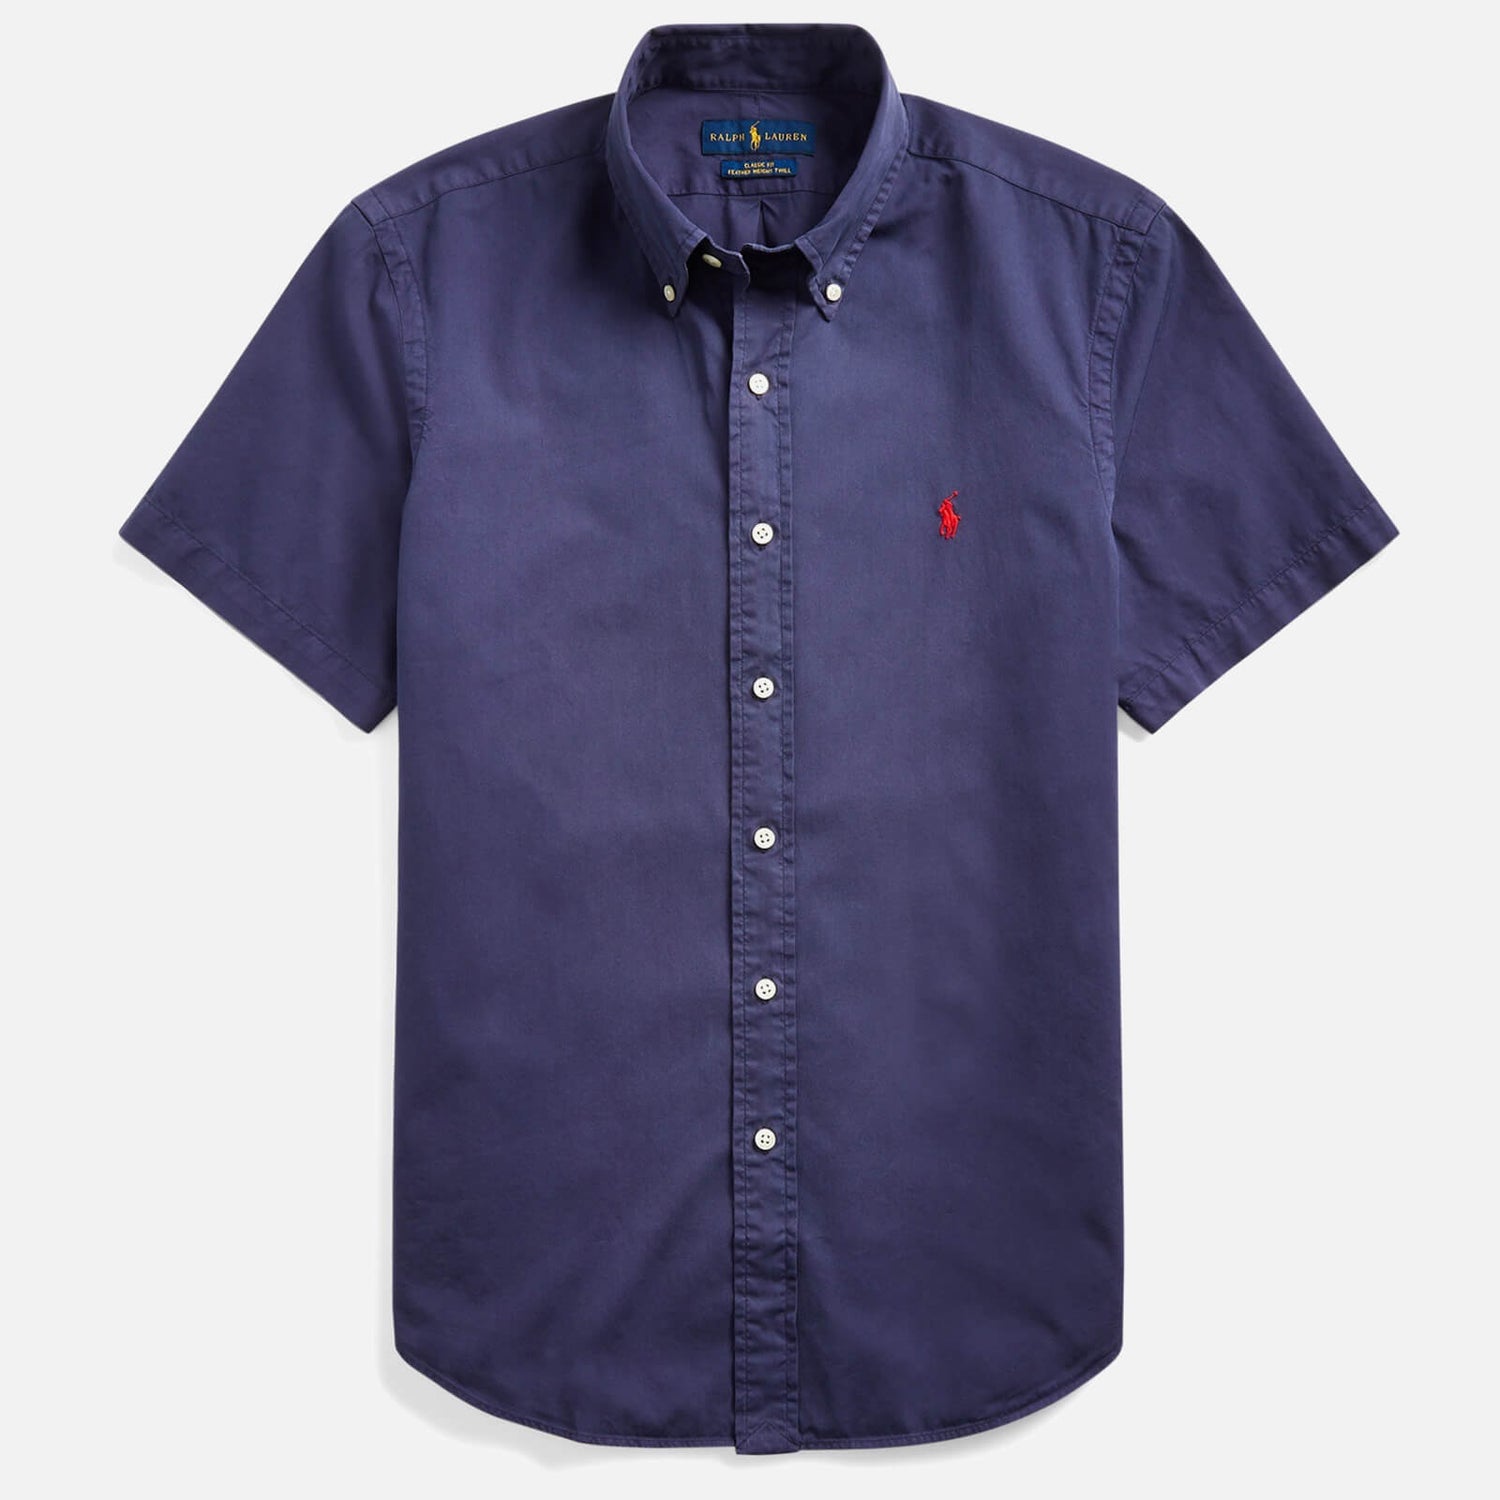 Polo Ralph Lauren Men's Slim Fit Garment Dyed Twill Short Sleeve Shirt - Cruise Navy - S